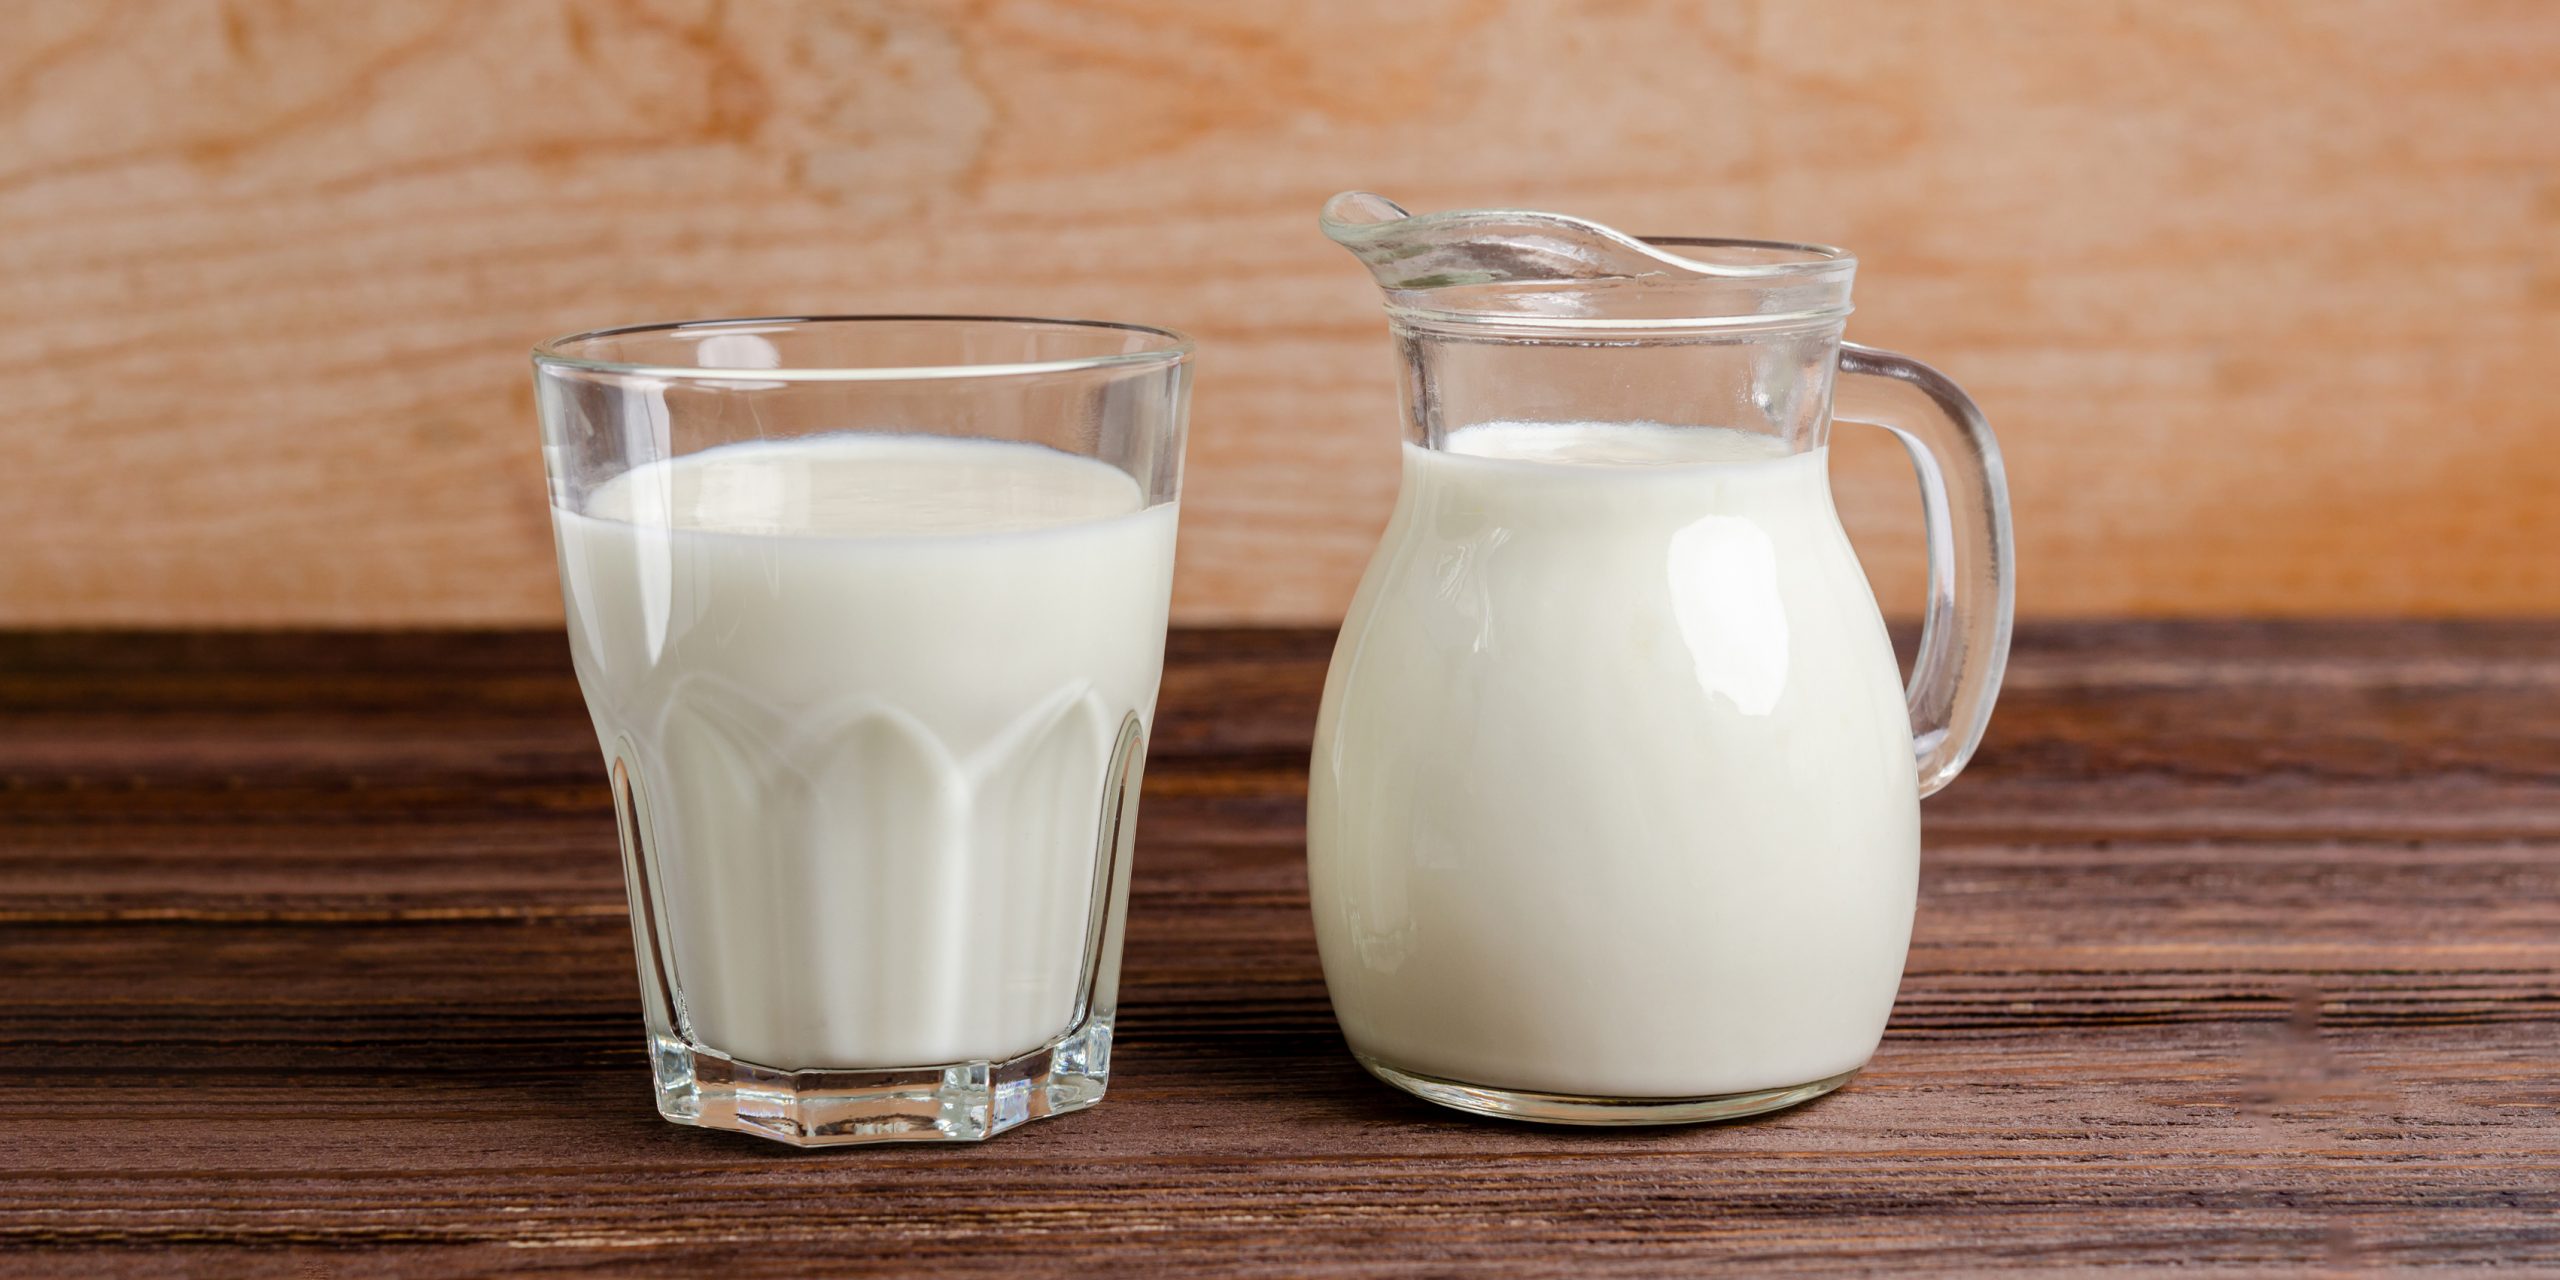 Is Milk Good For Diabetes?